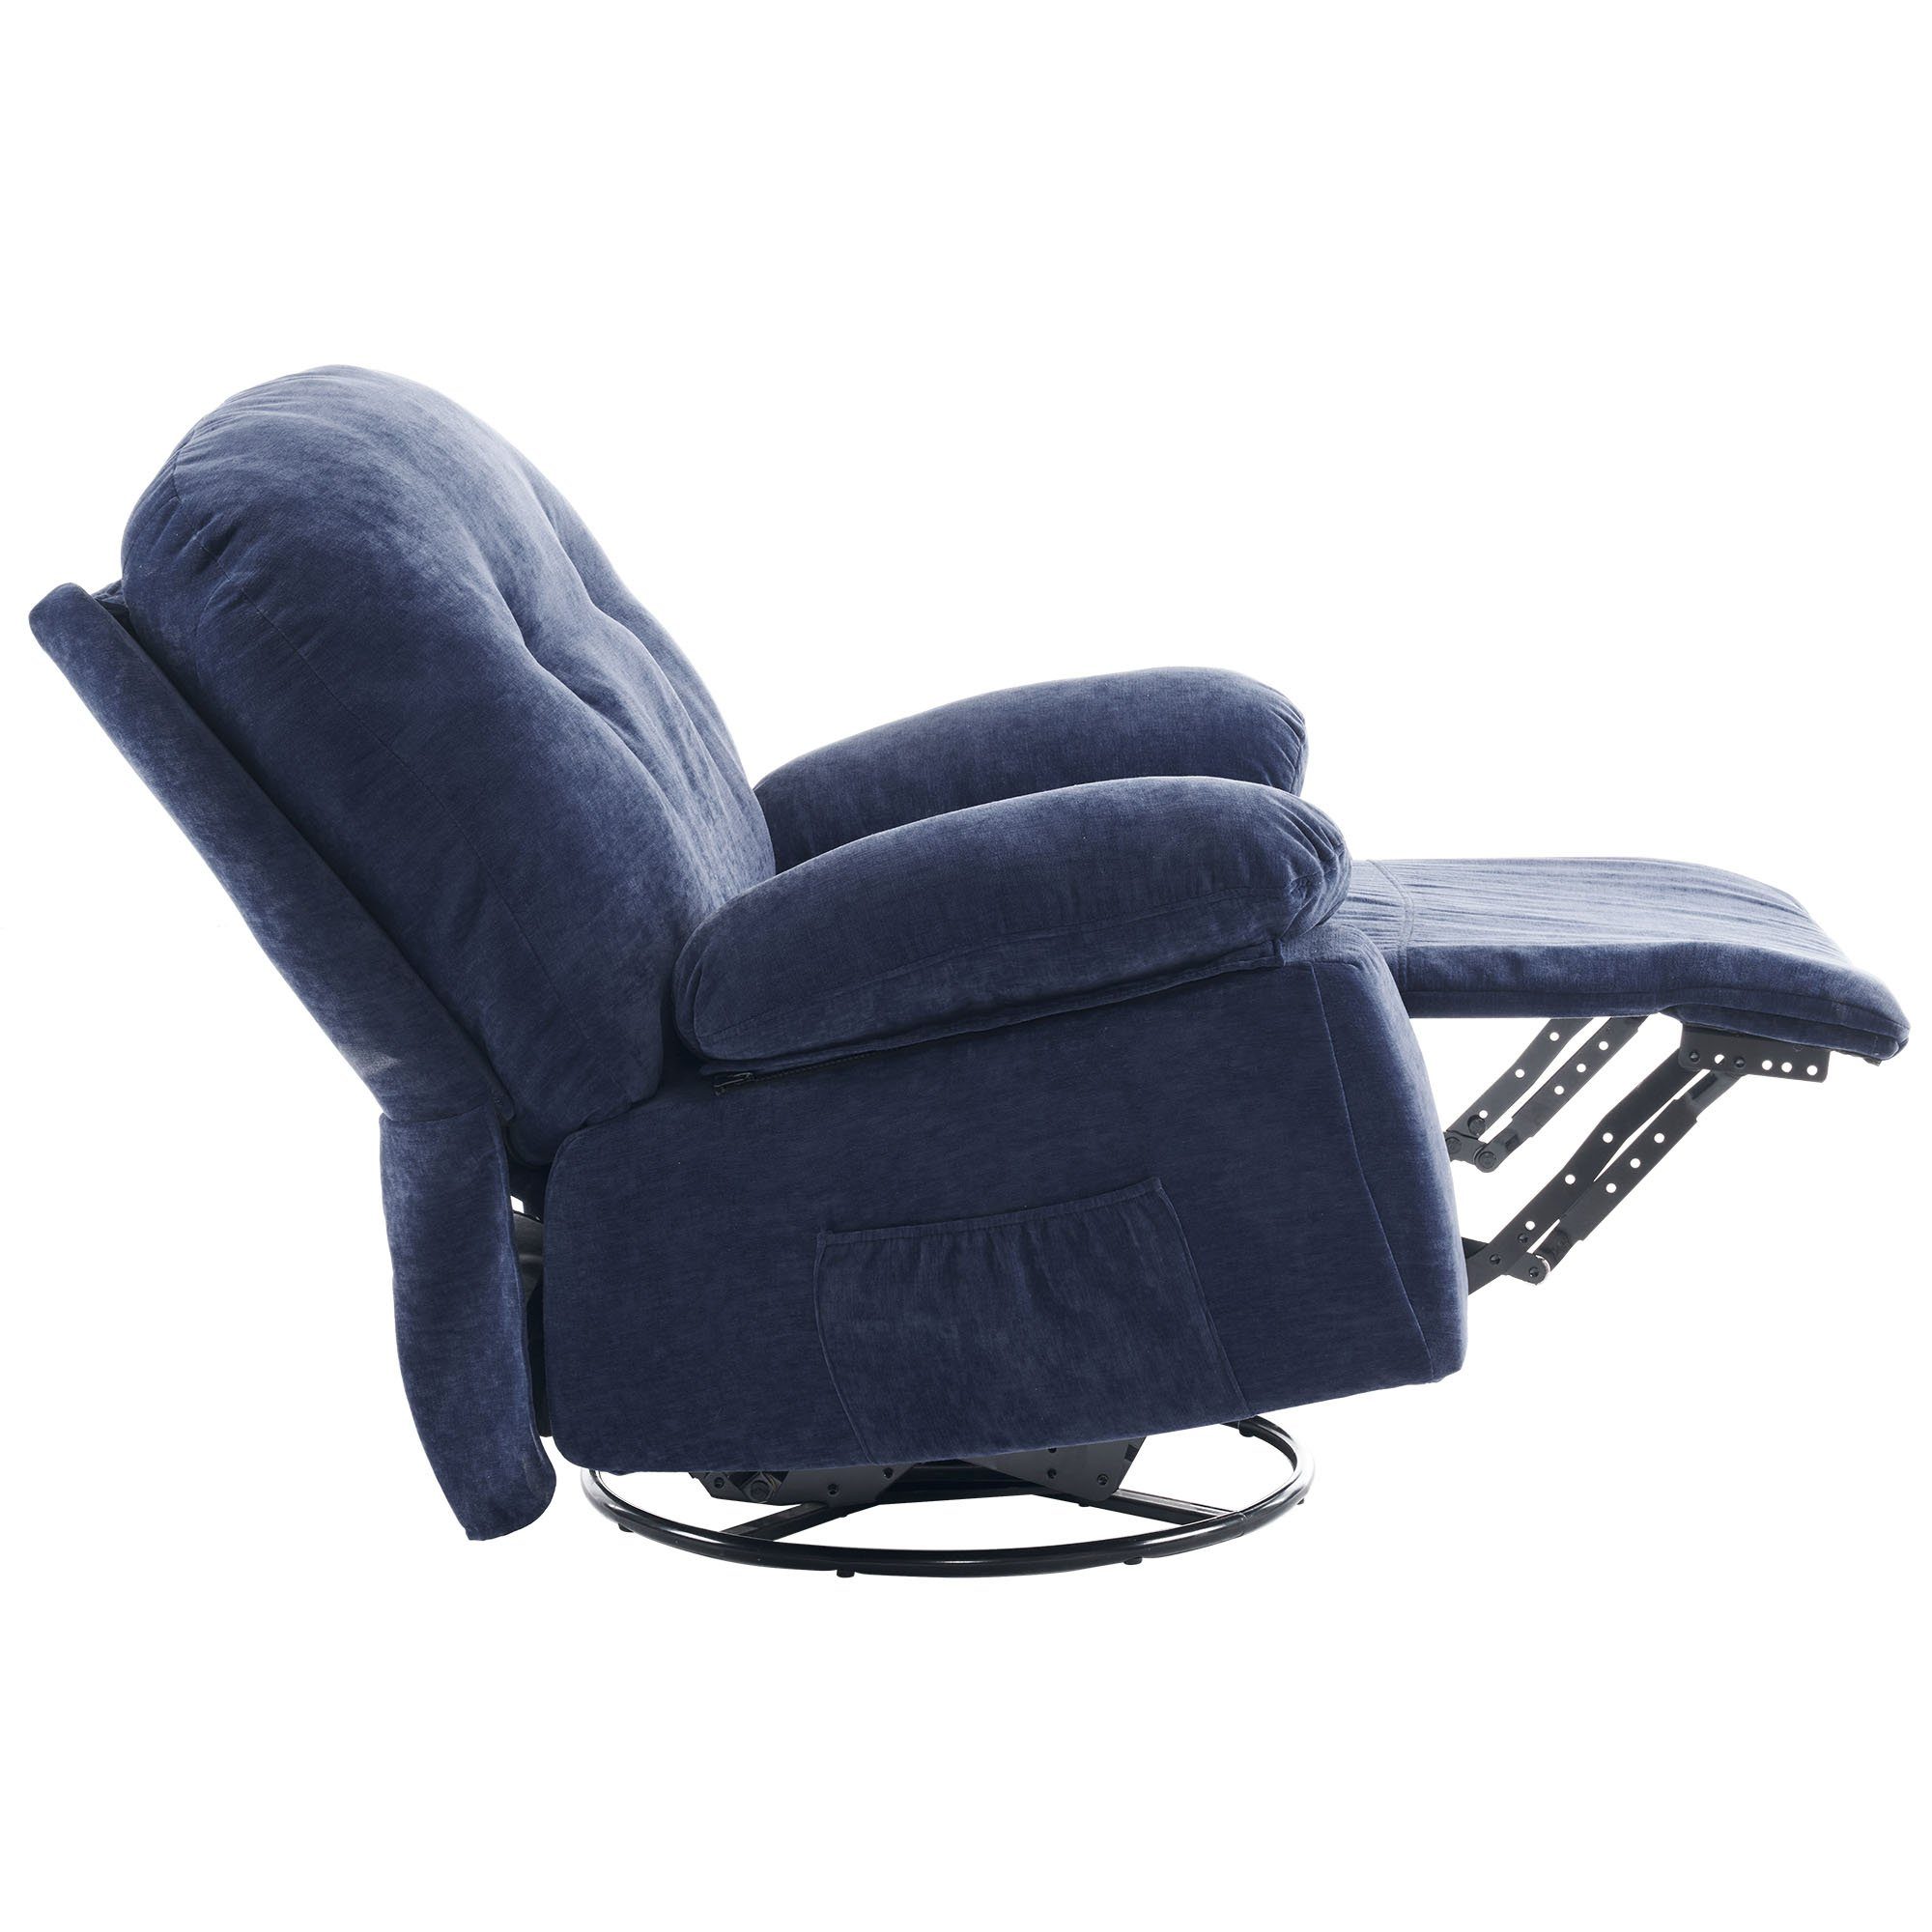 360°-Drehsessel Sessel Blau 360° Drehfunktion TV-Sessel mit Ulife Massagesessel Timer Loungesessel, und Relaxsessel